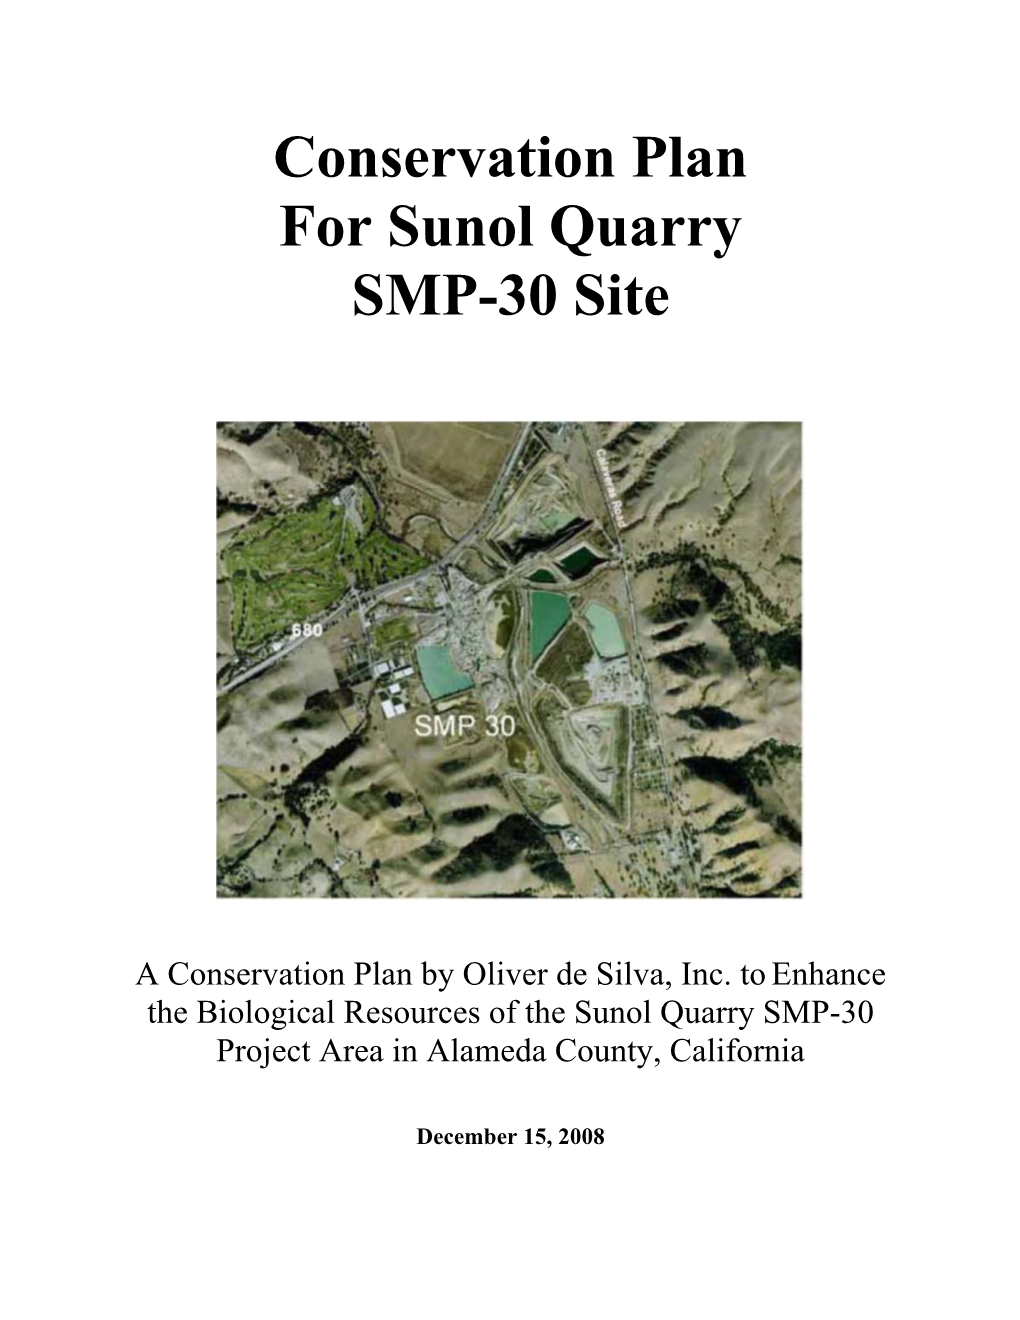 Sunol Quarry Conservation Plan